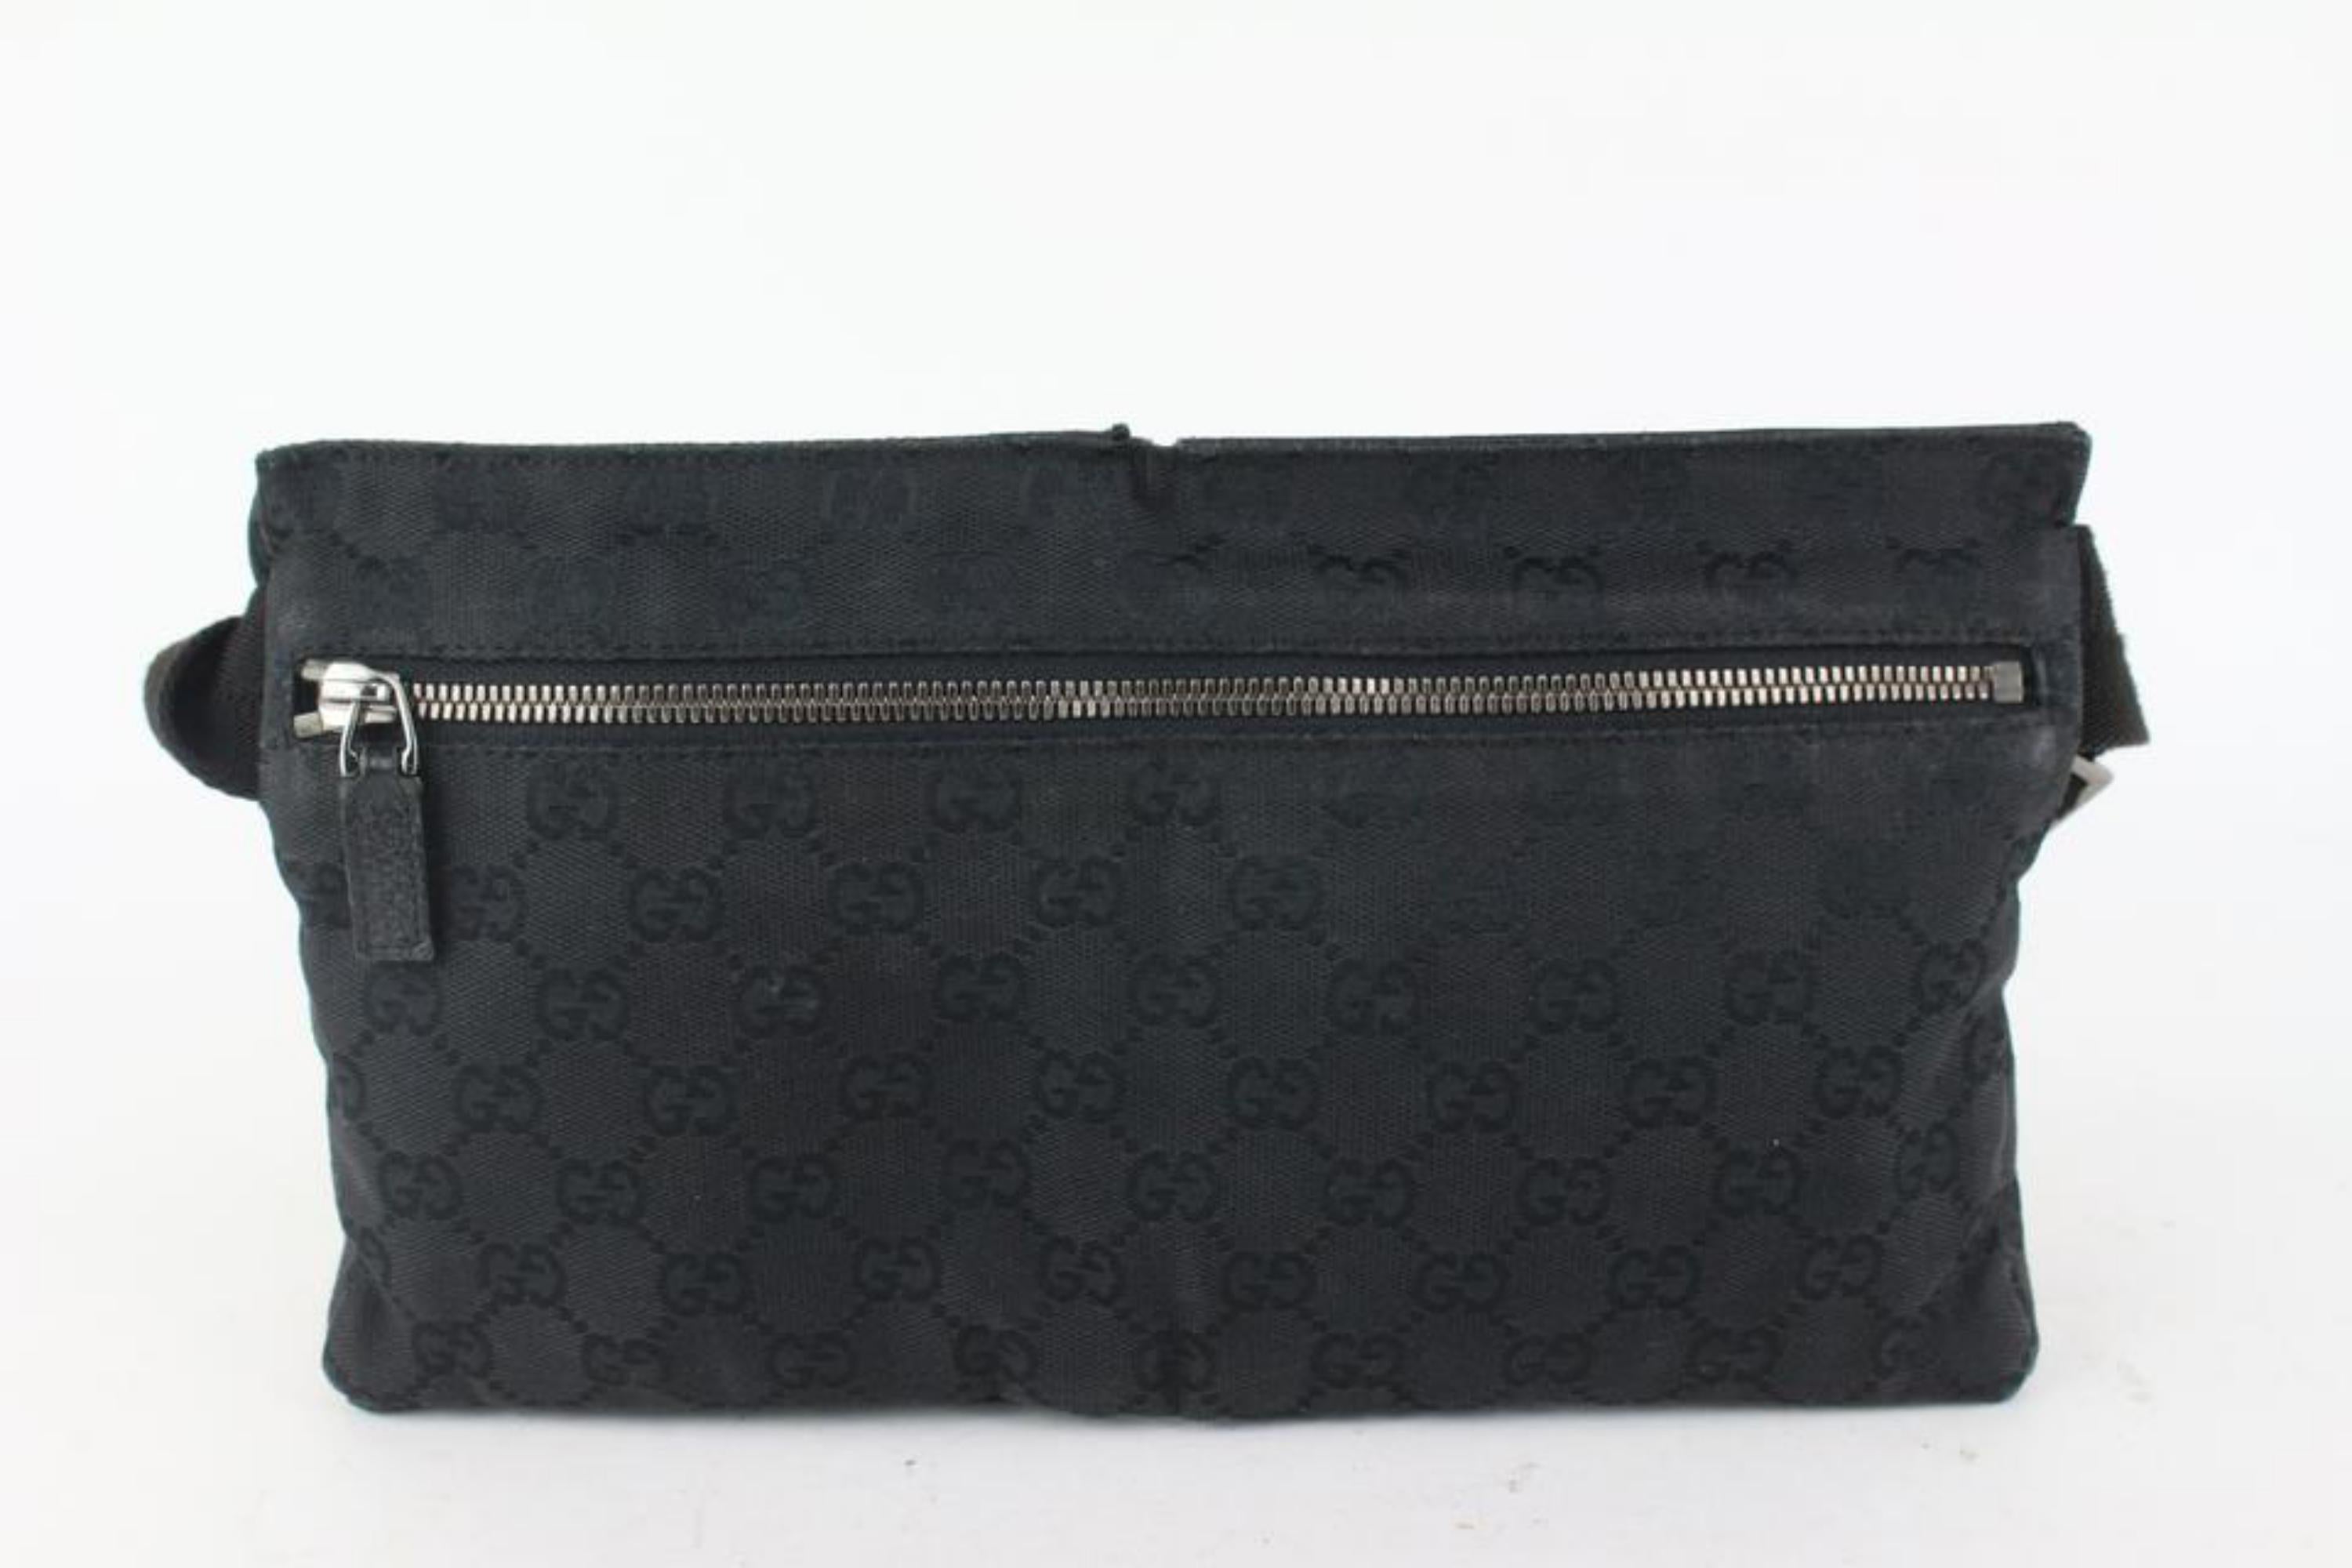 Gucci Black Monogram GG Belt Bag Fanny Pack Waist Pouch 105g5 2